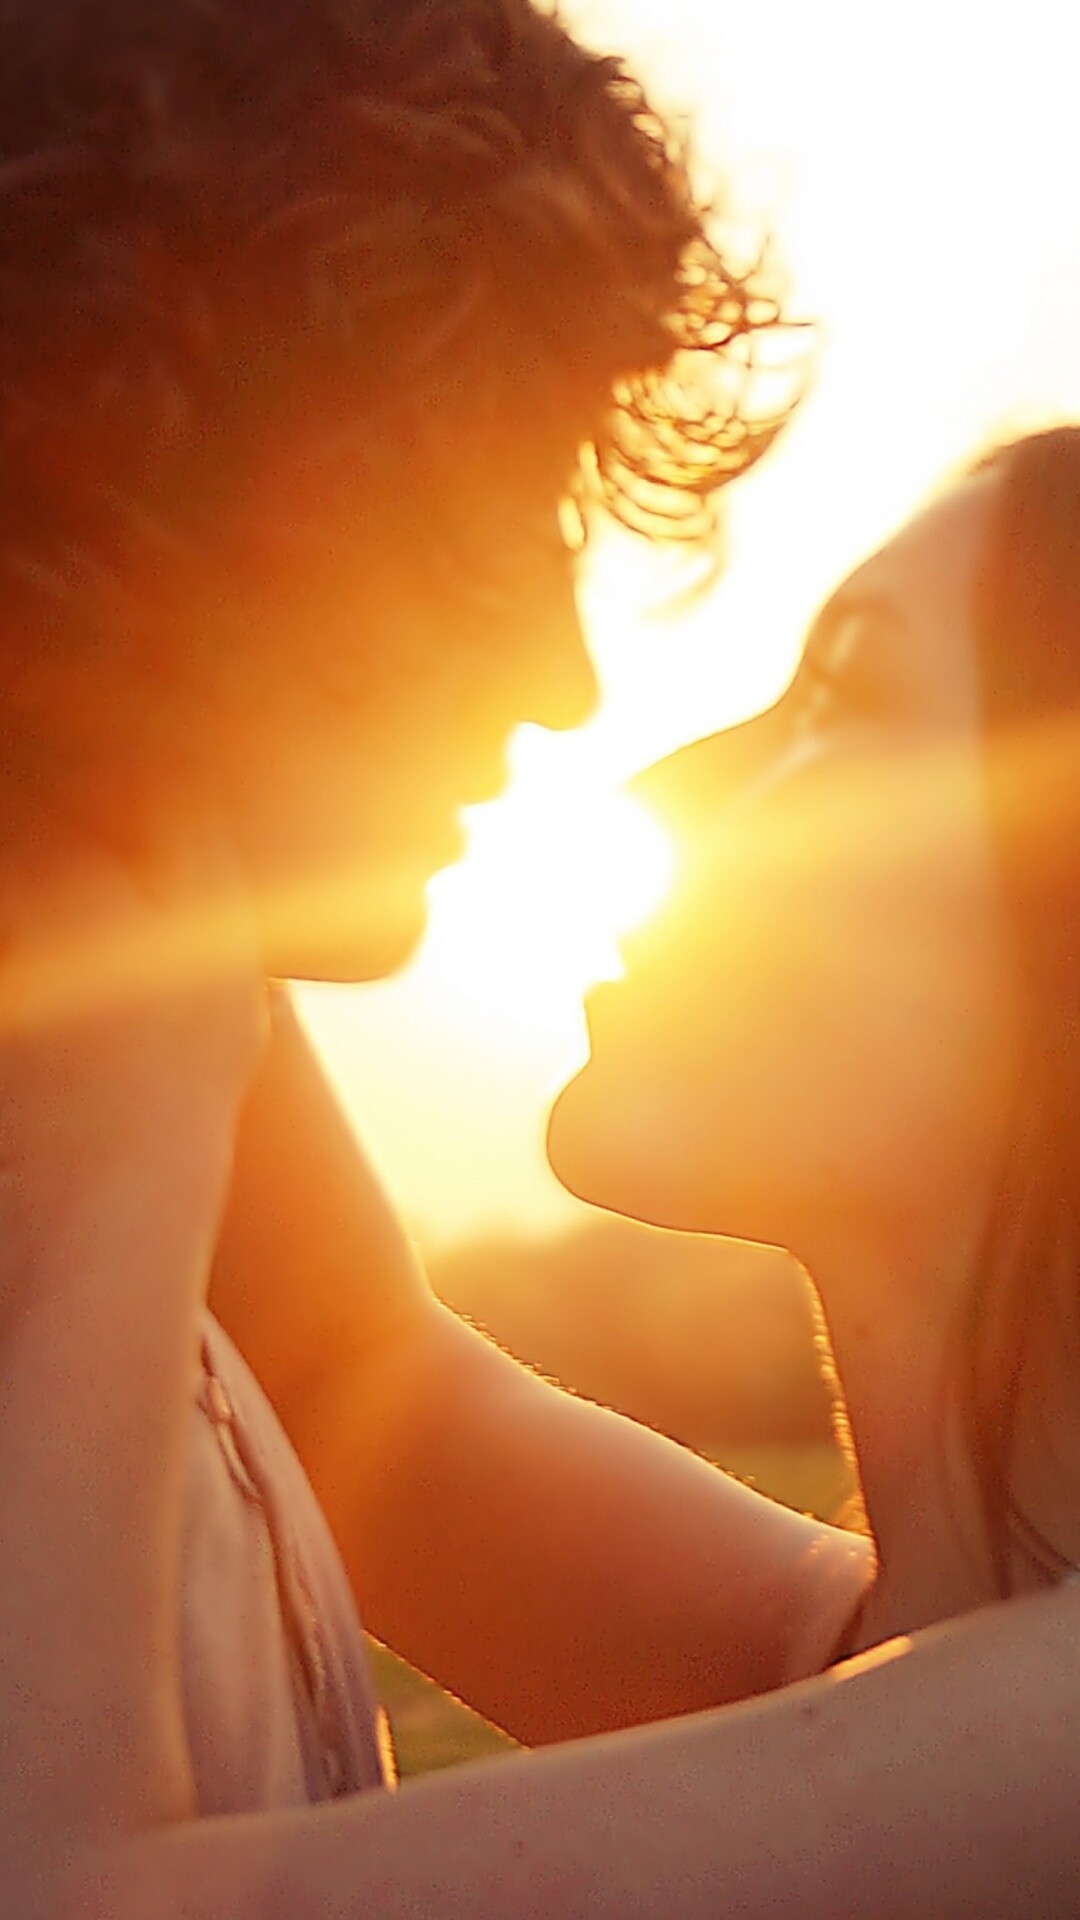 Kiss: Passion, Romance, Amorous caressing. 1080x1920 Full HD Background.